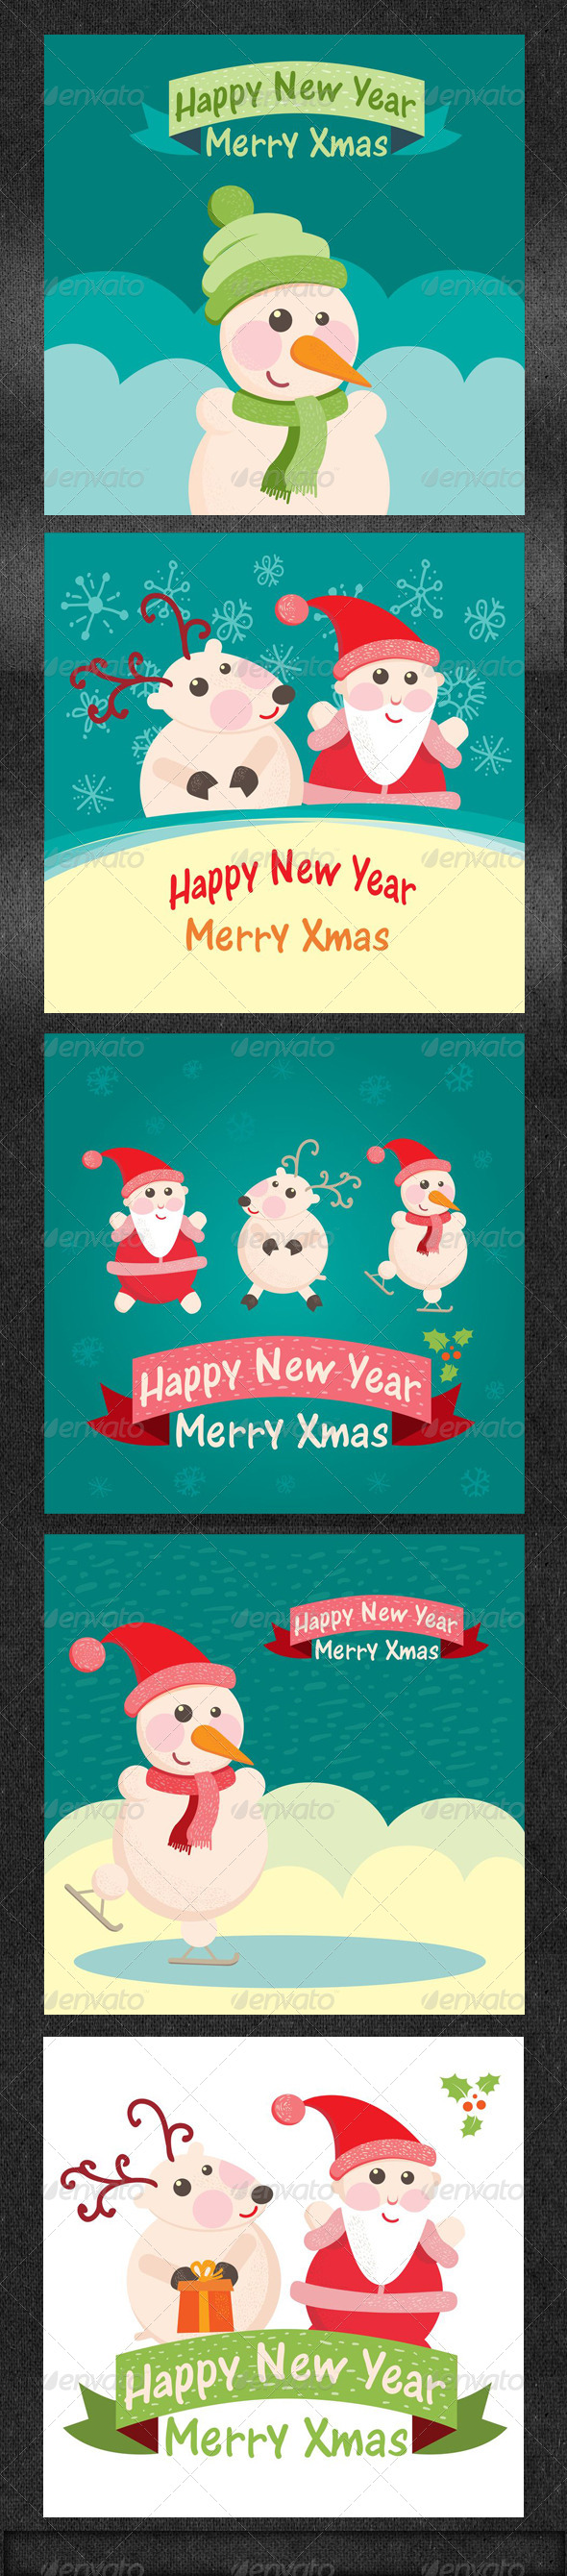 Christmas Greeting Card Part 1